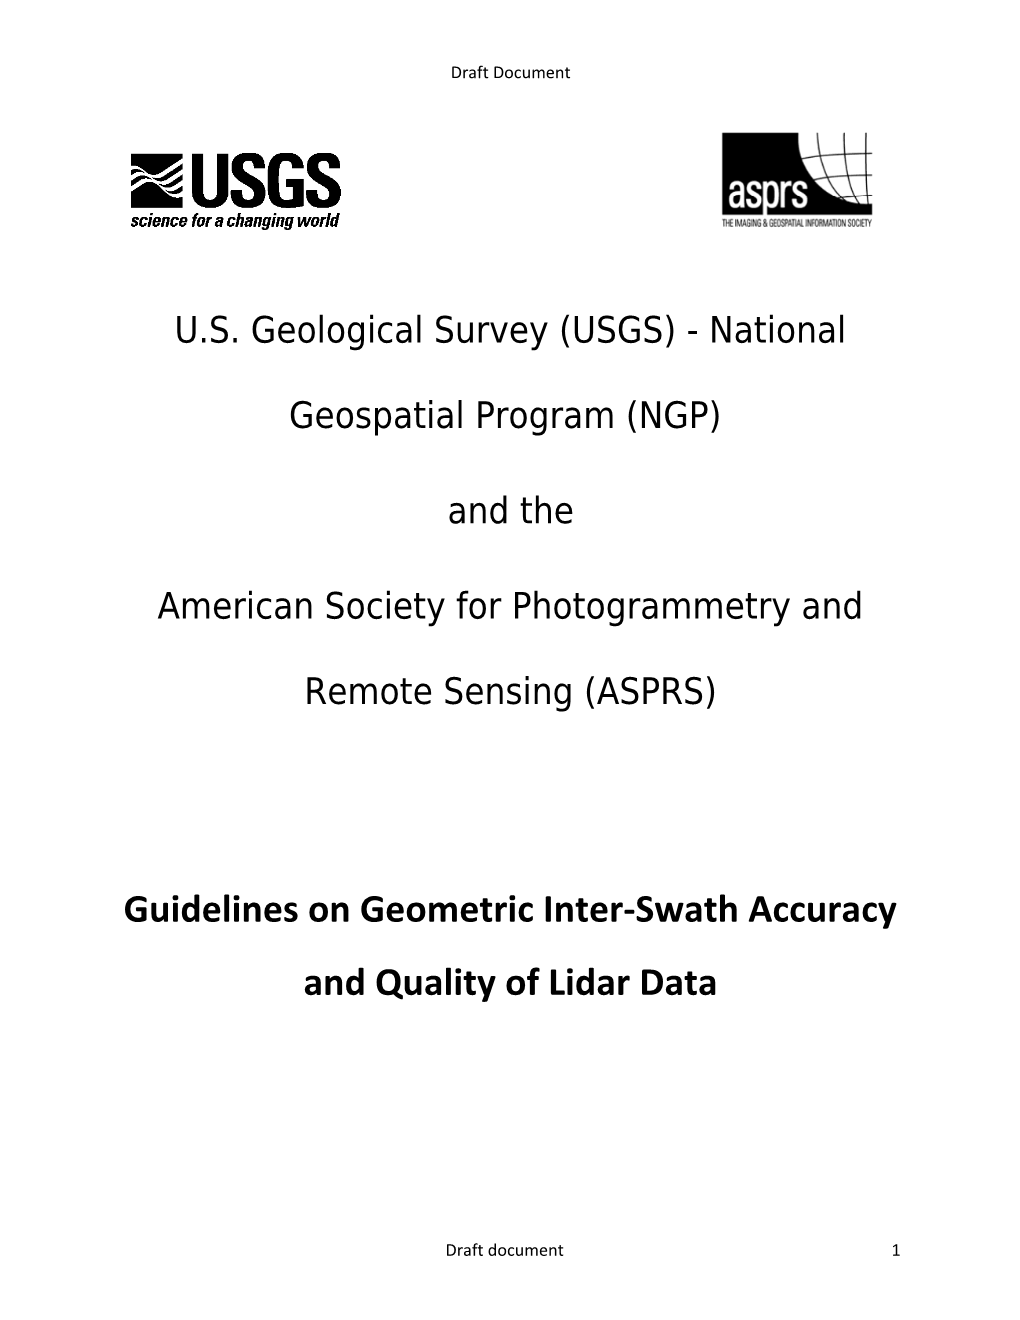 U.S. Geological Survey (USGS) - National Geospatial Program (NGP)